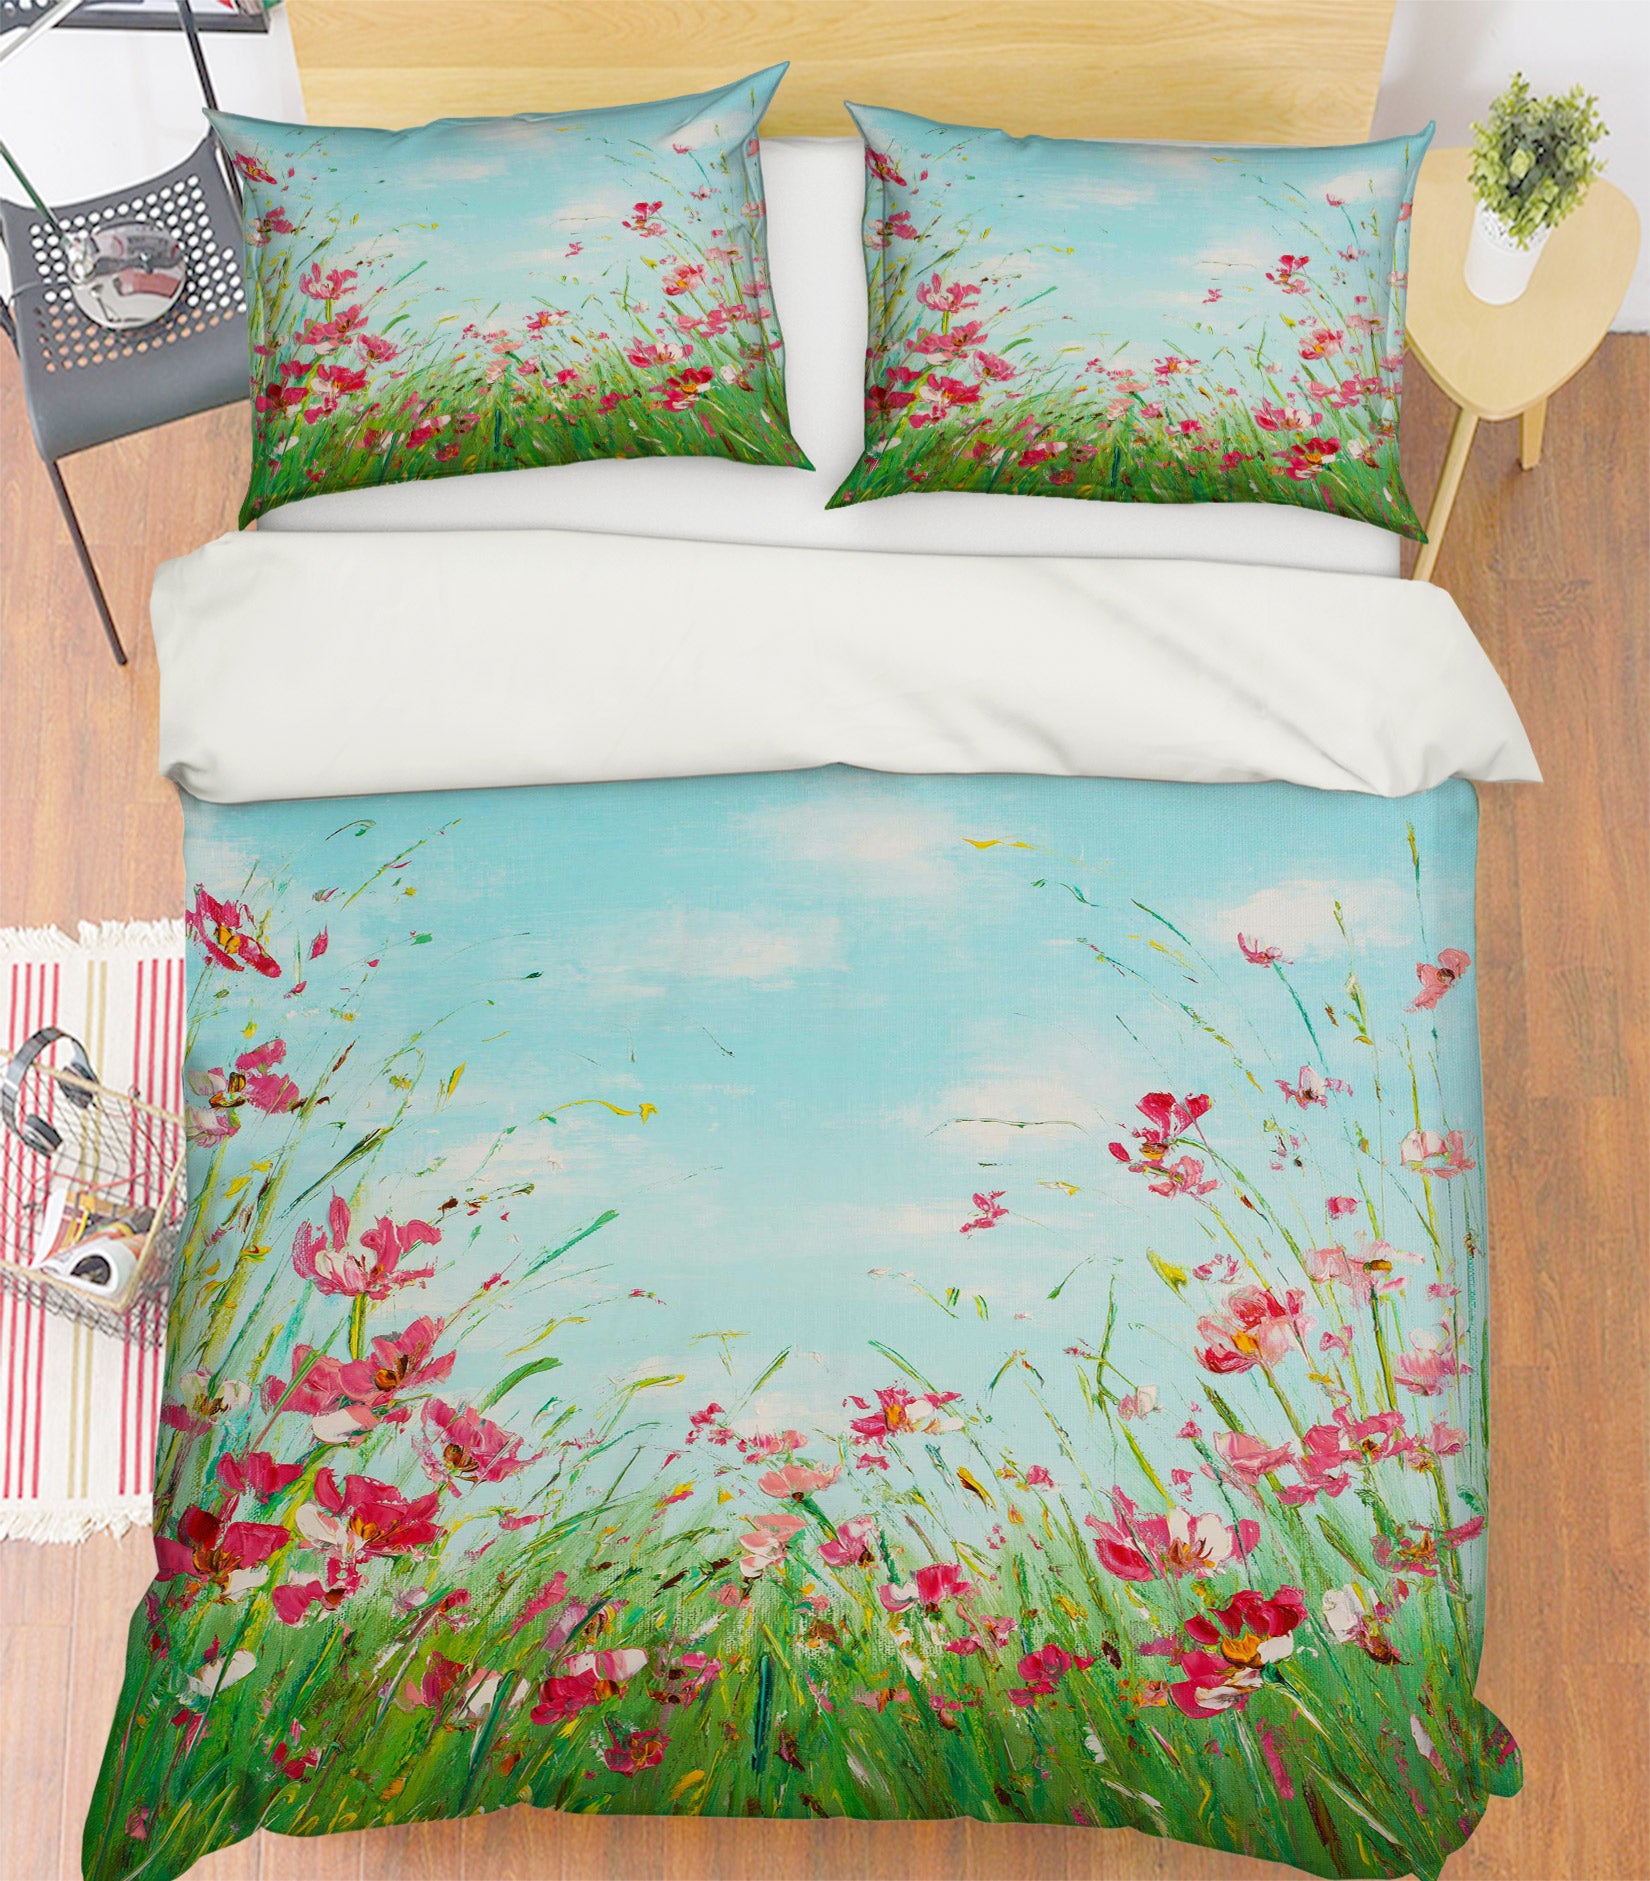 3D Pink Flower 509 Skromova Marina Bedding Bed Pillowcases Quilt